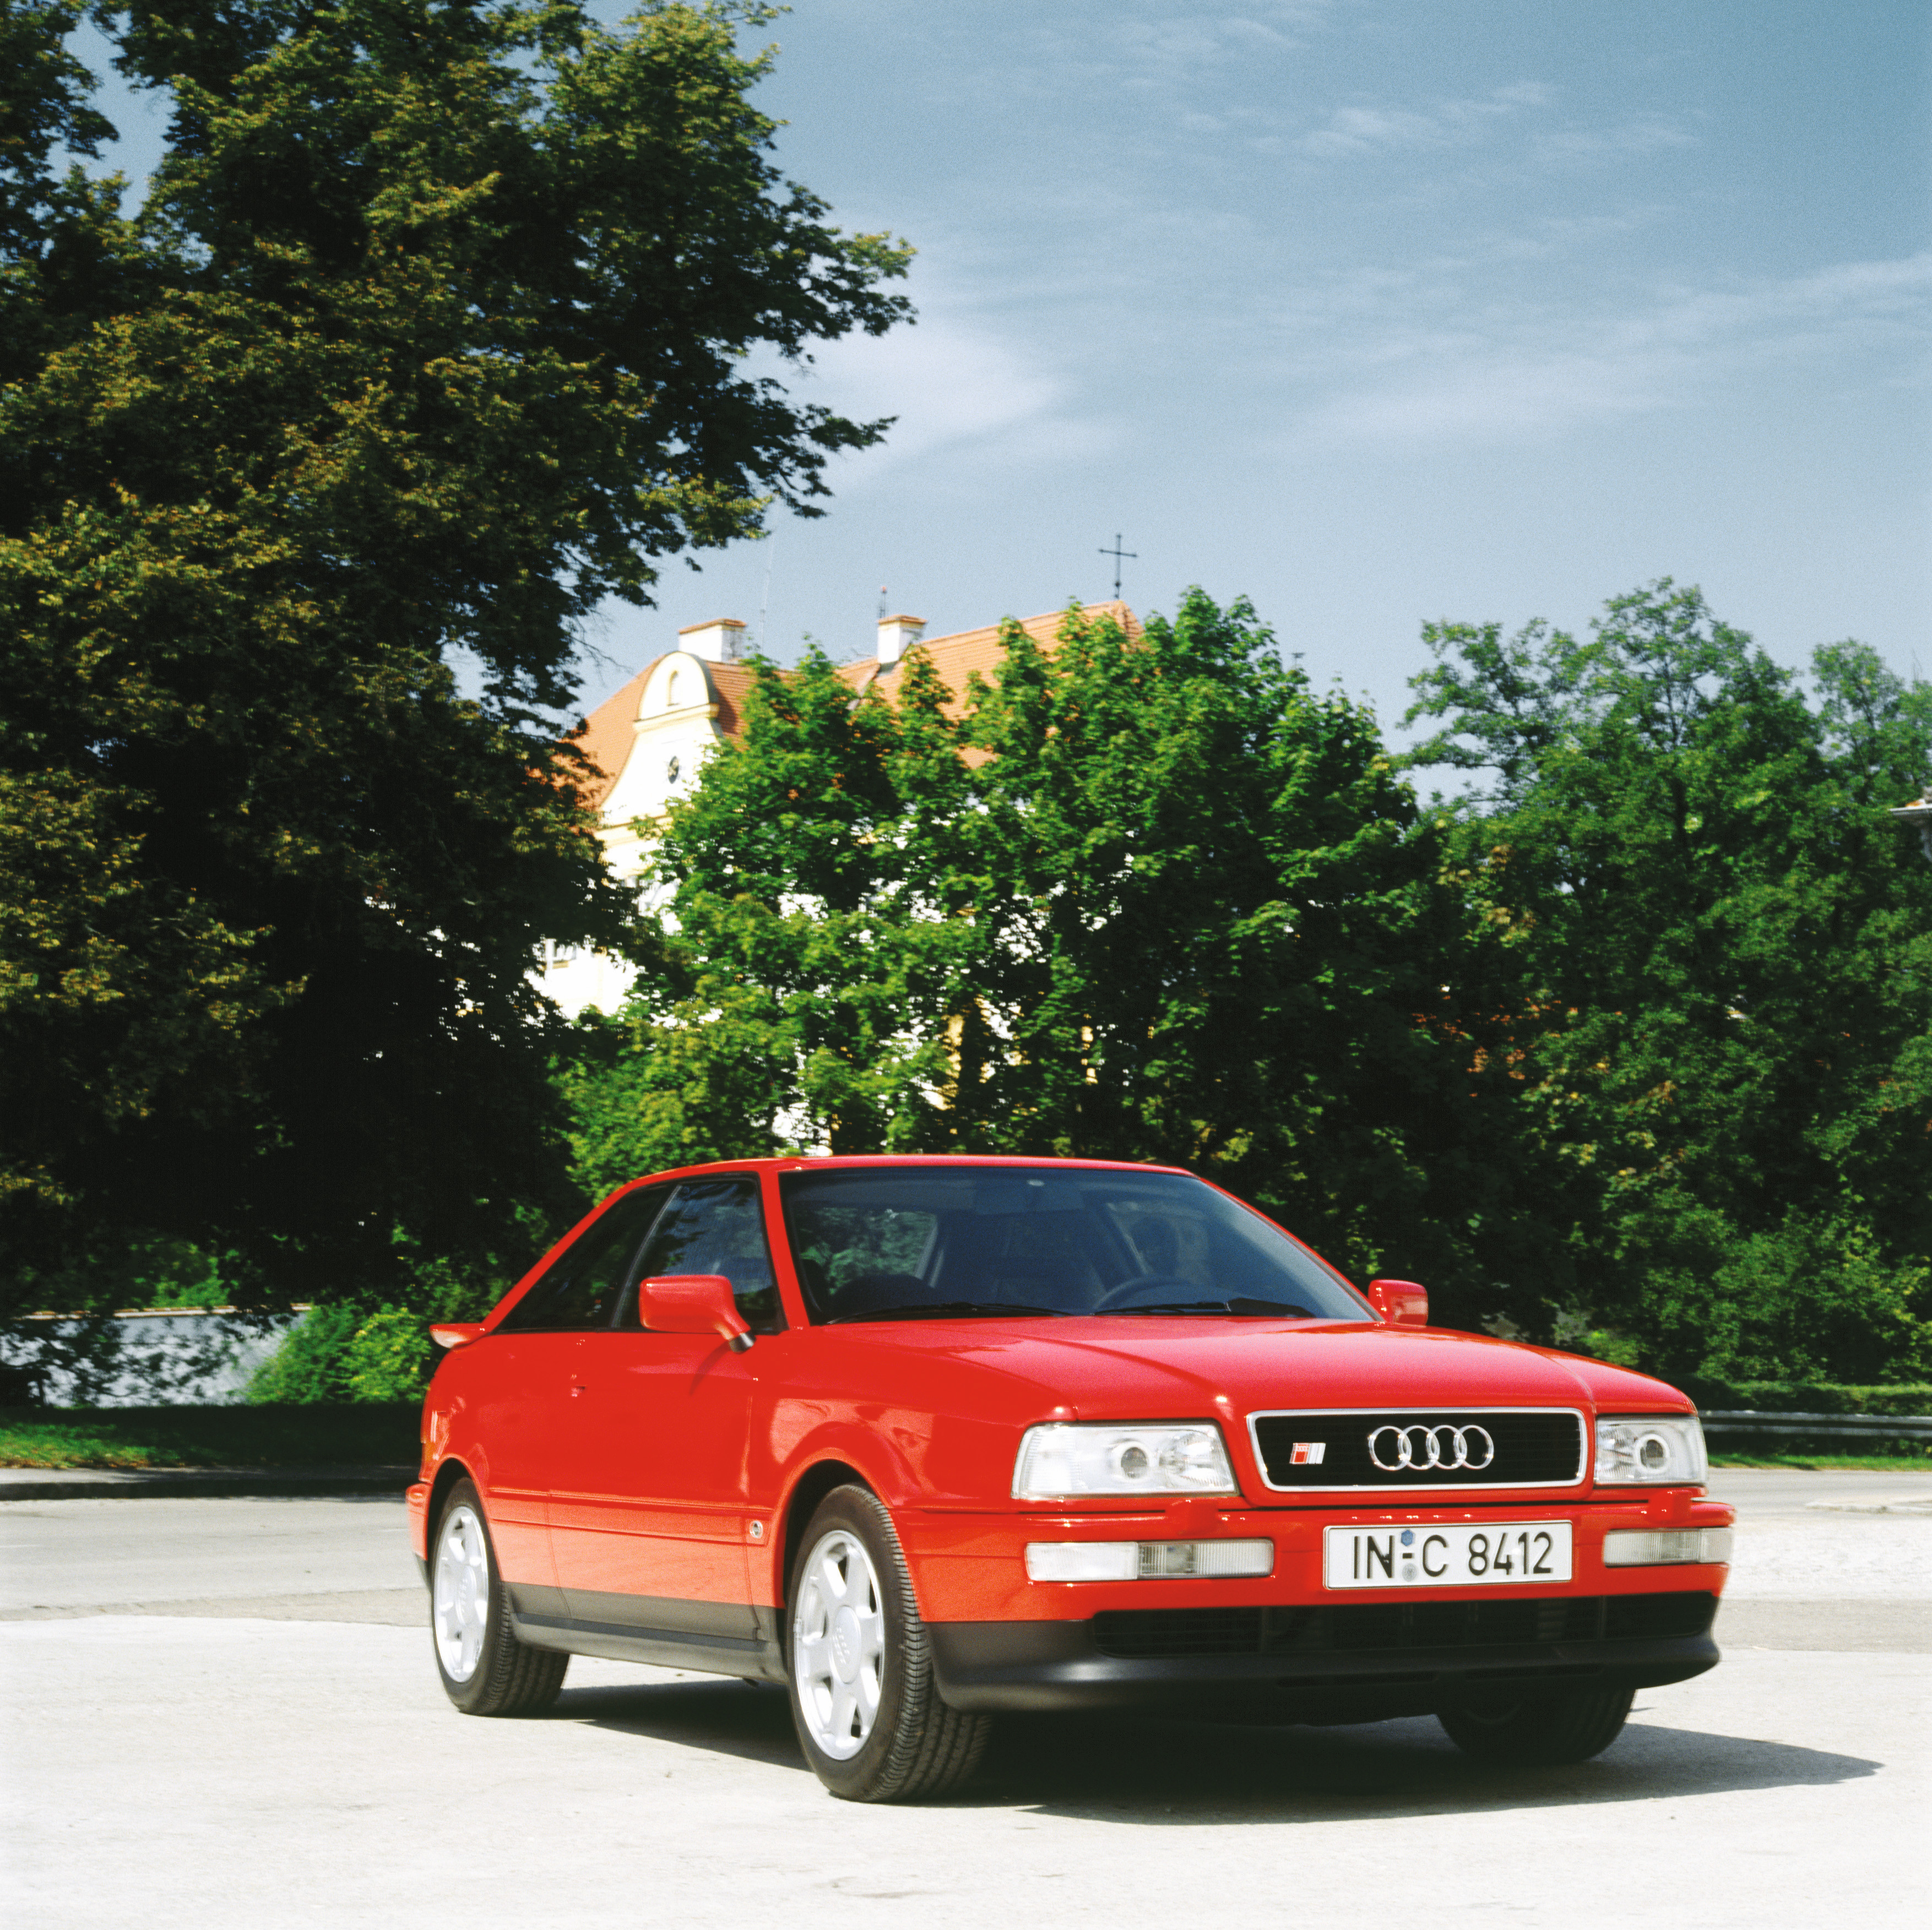 Historien om Audi S og RS - del 1